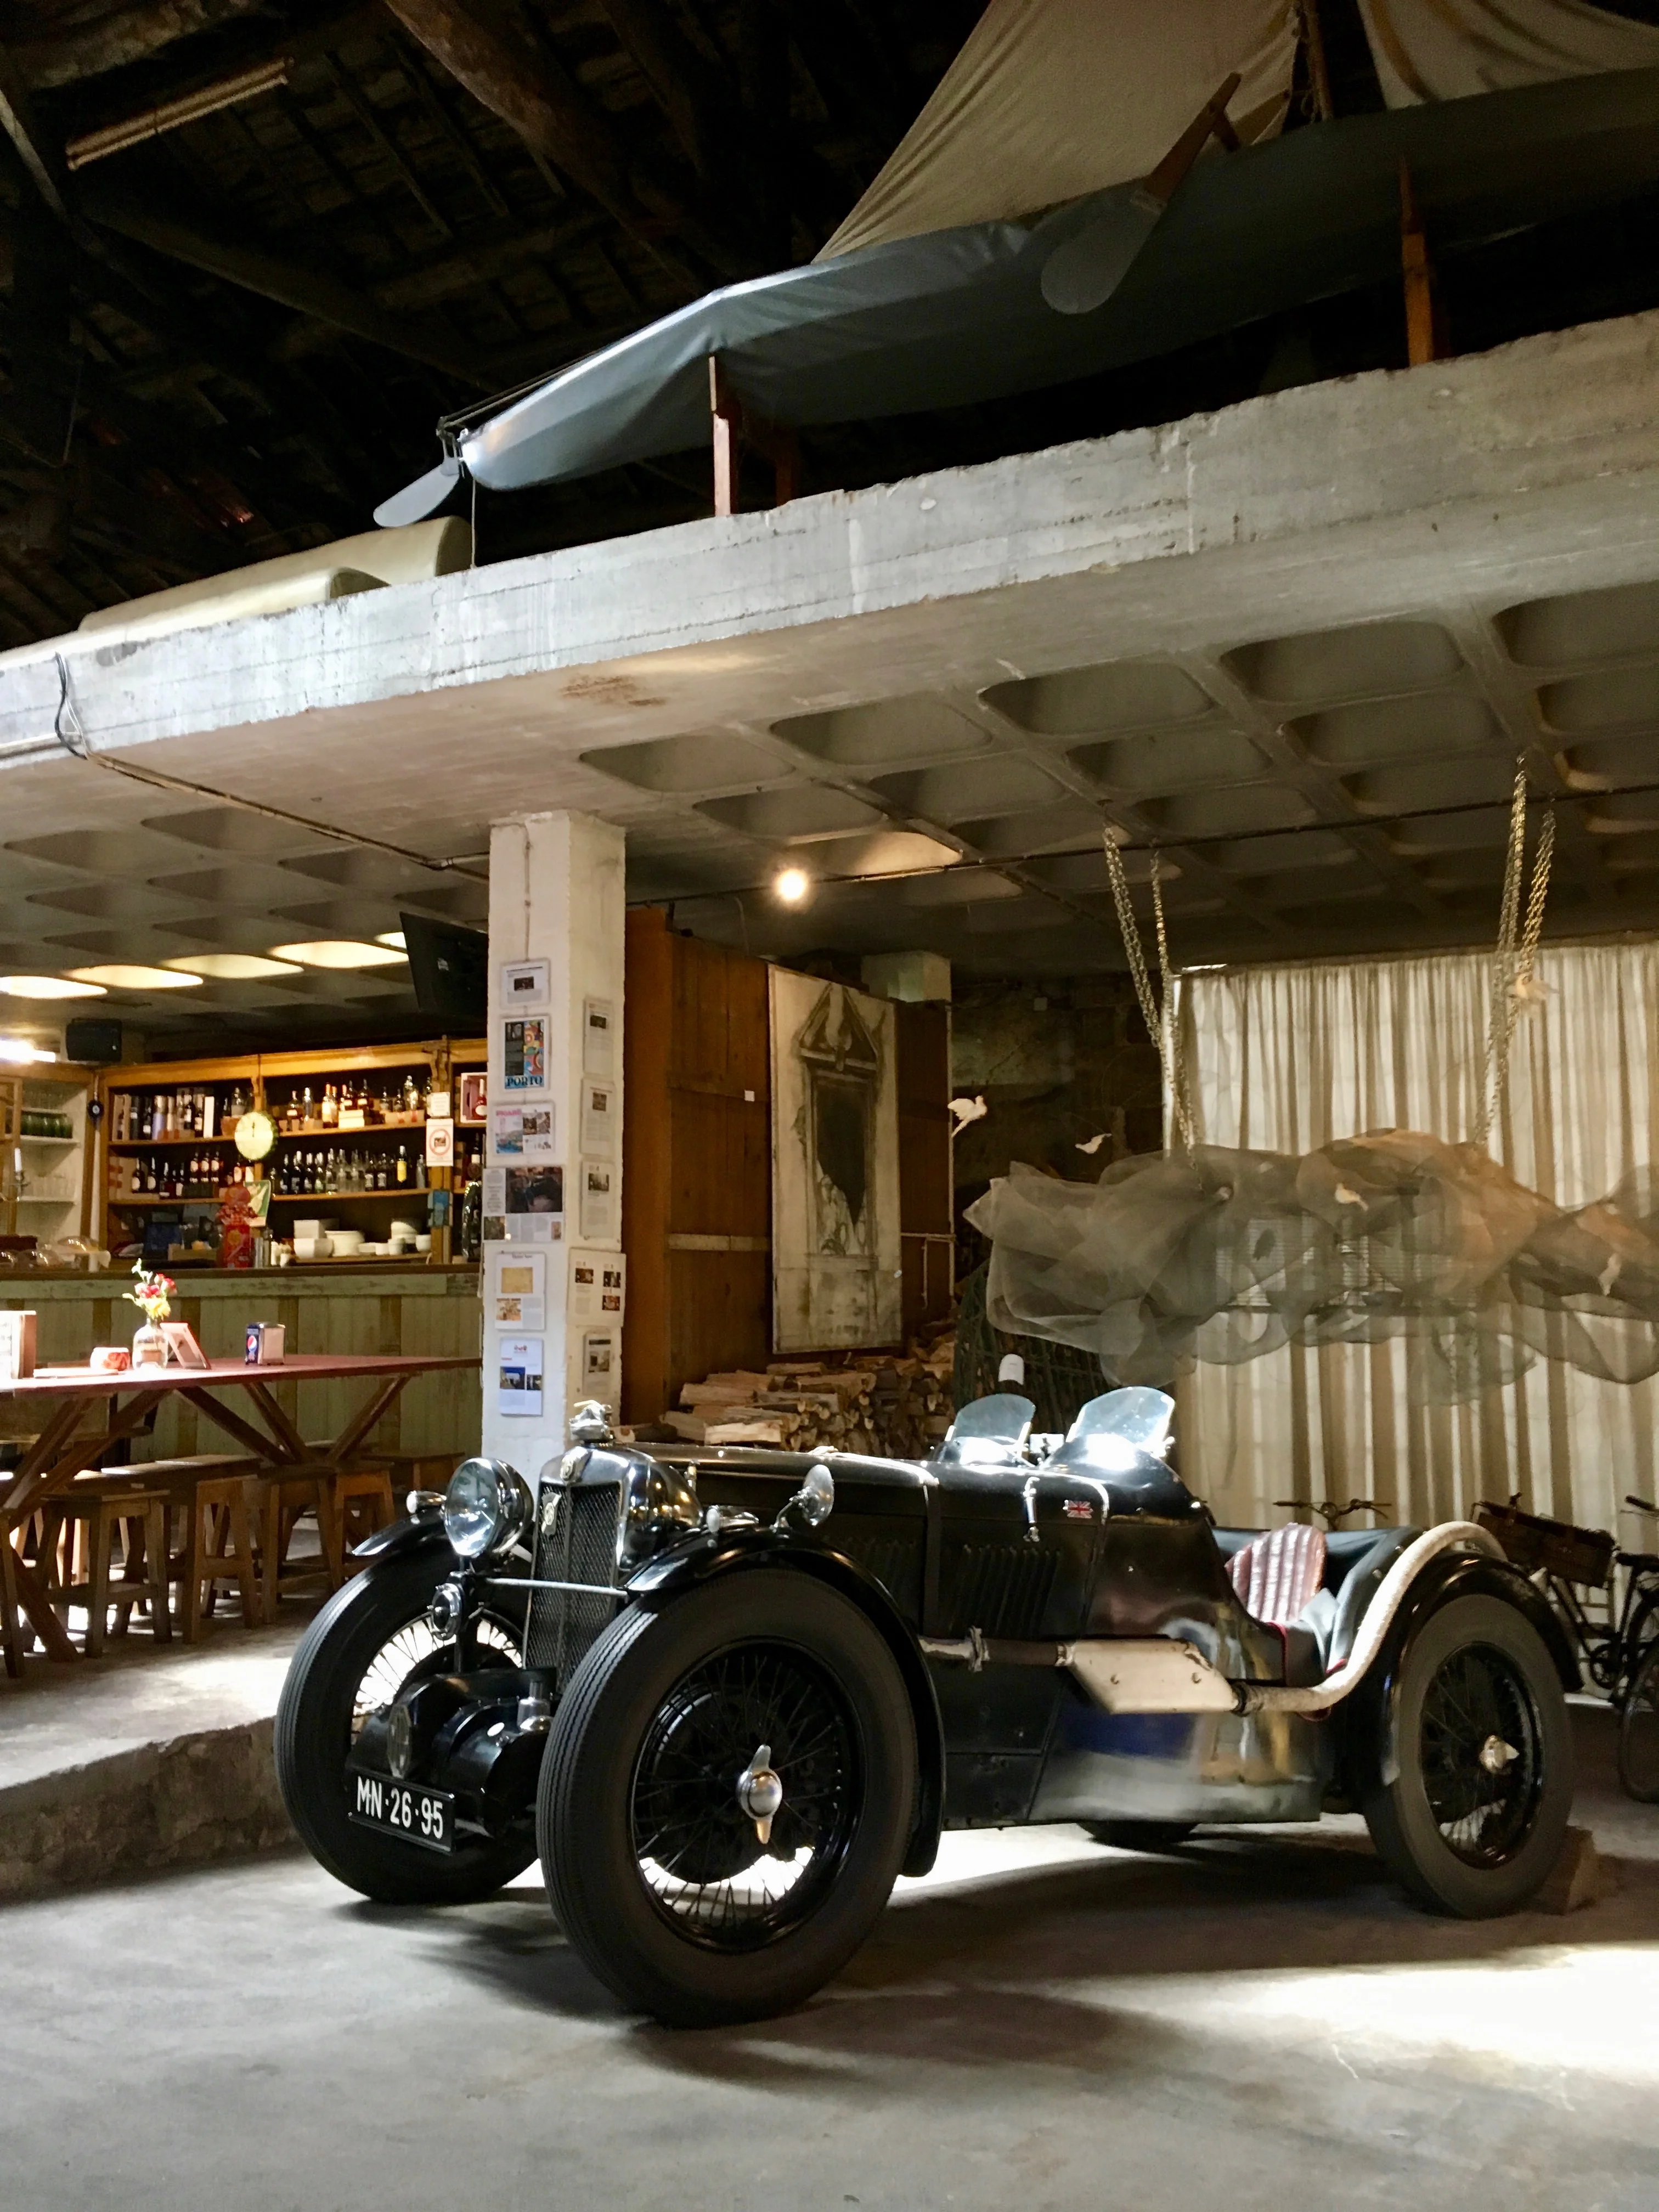 A 1950s car inside of Armazém